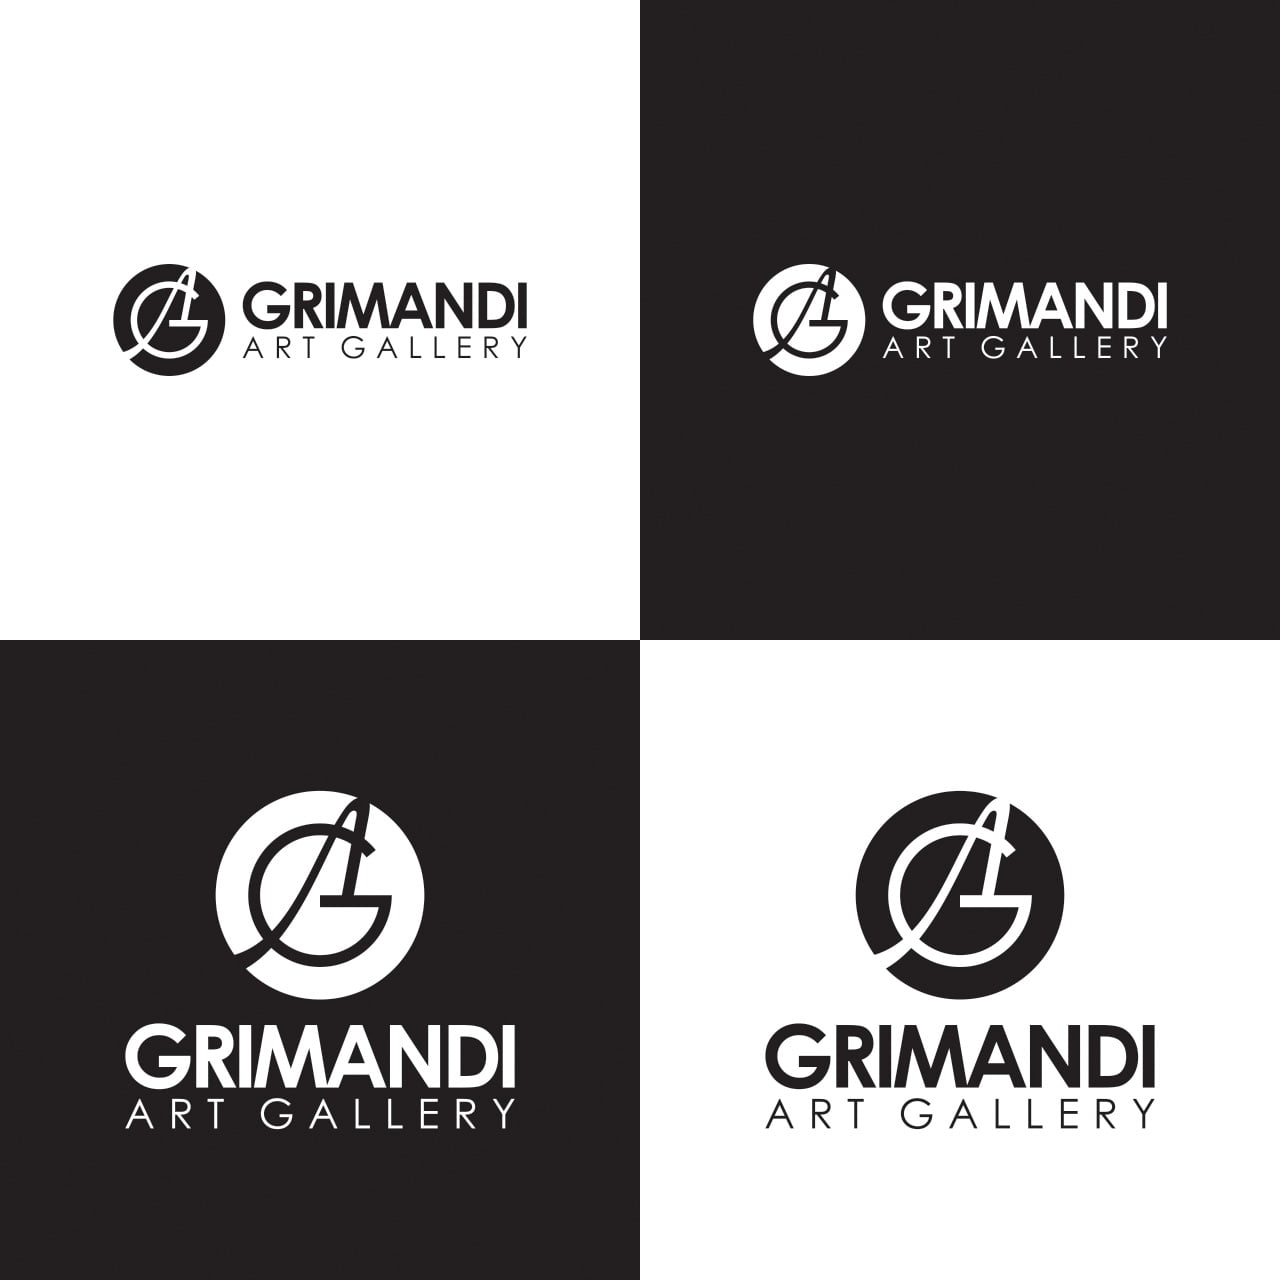 GRIMANDI ART GALLERY